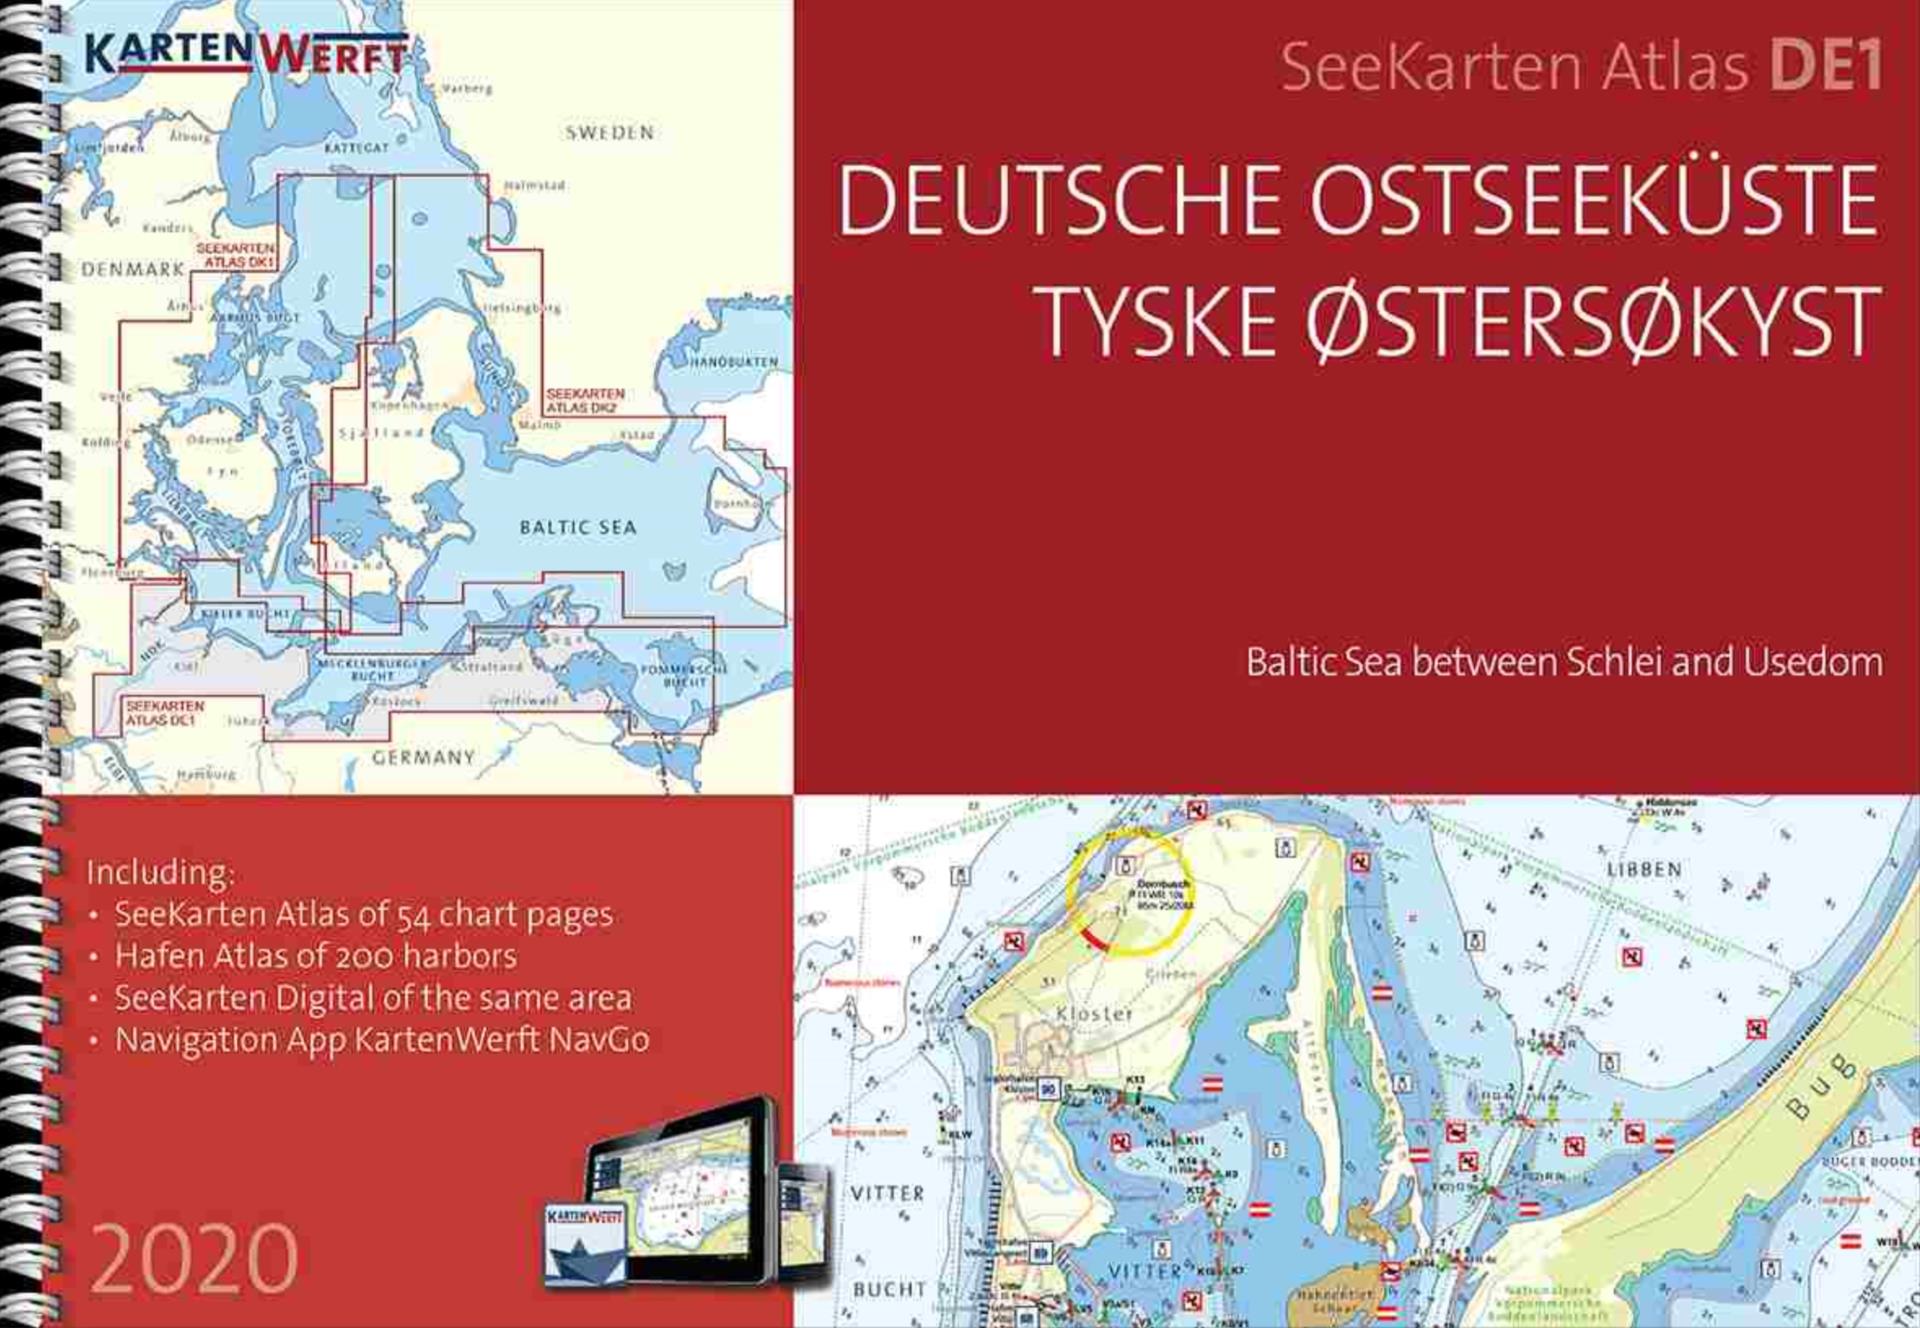 Kartenwerft Seekarten Atlas DE1, Deutsche Ostseeküste